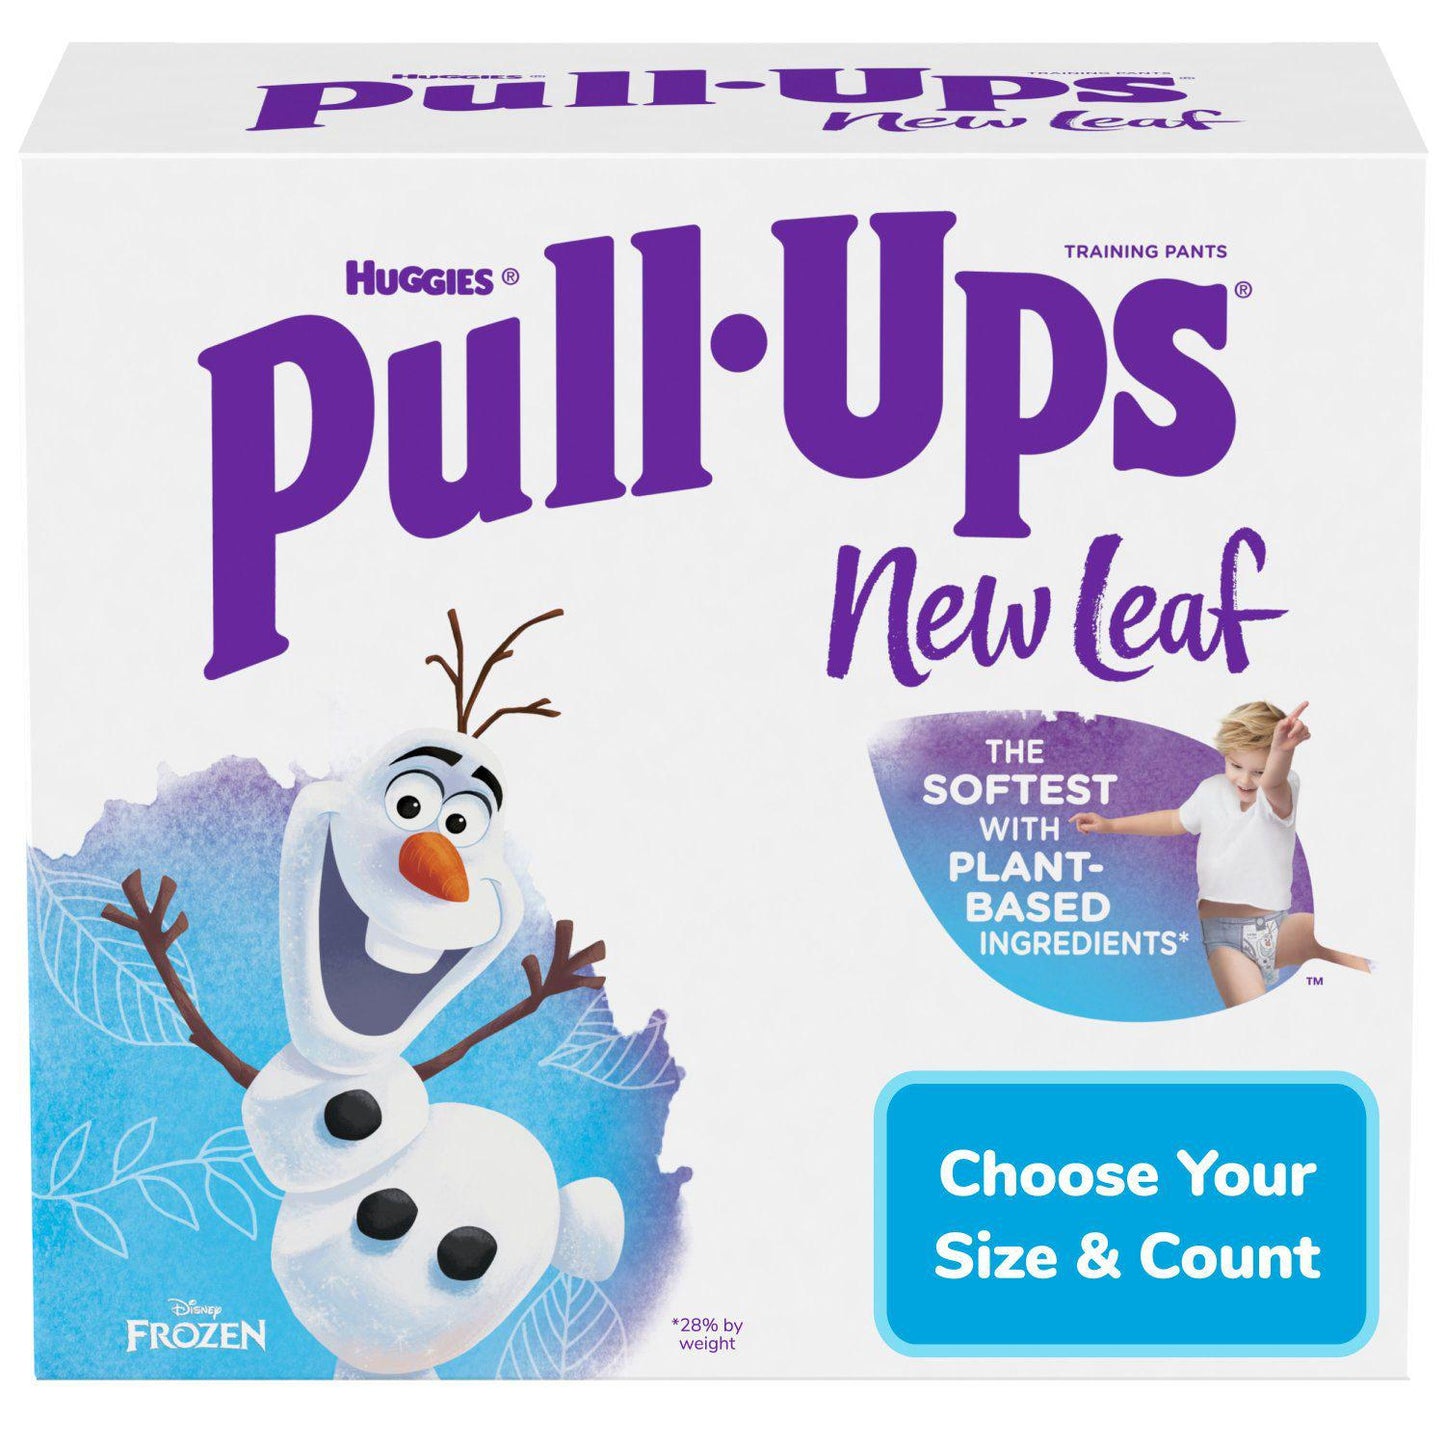 Huggies Pull-Ups New Leaf Training Underwear for Boys (Sizes 2T - 5T)